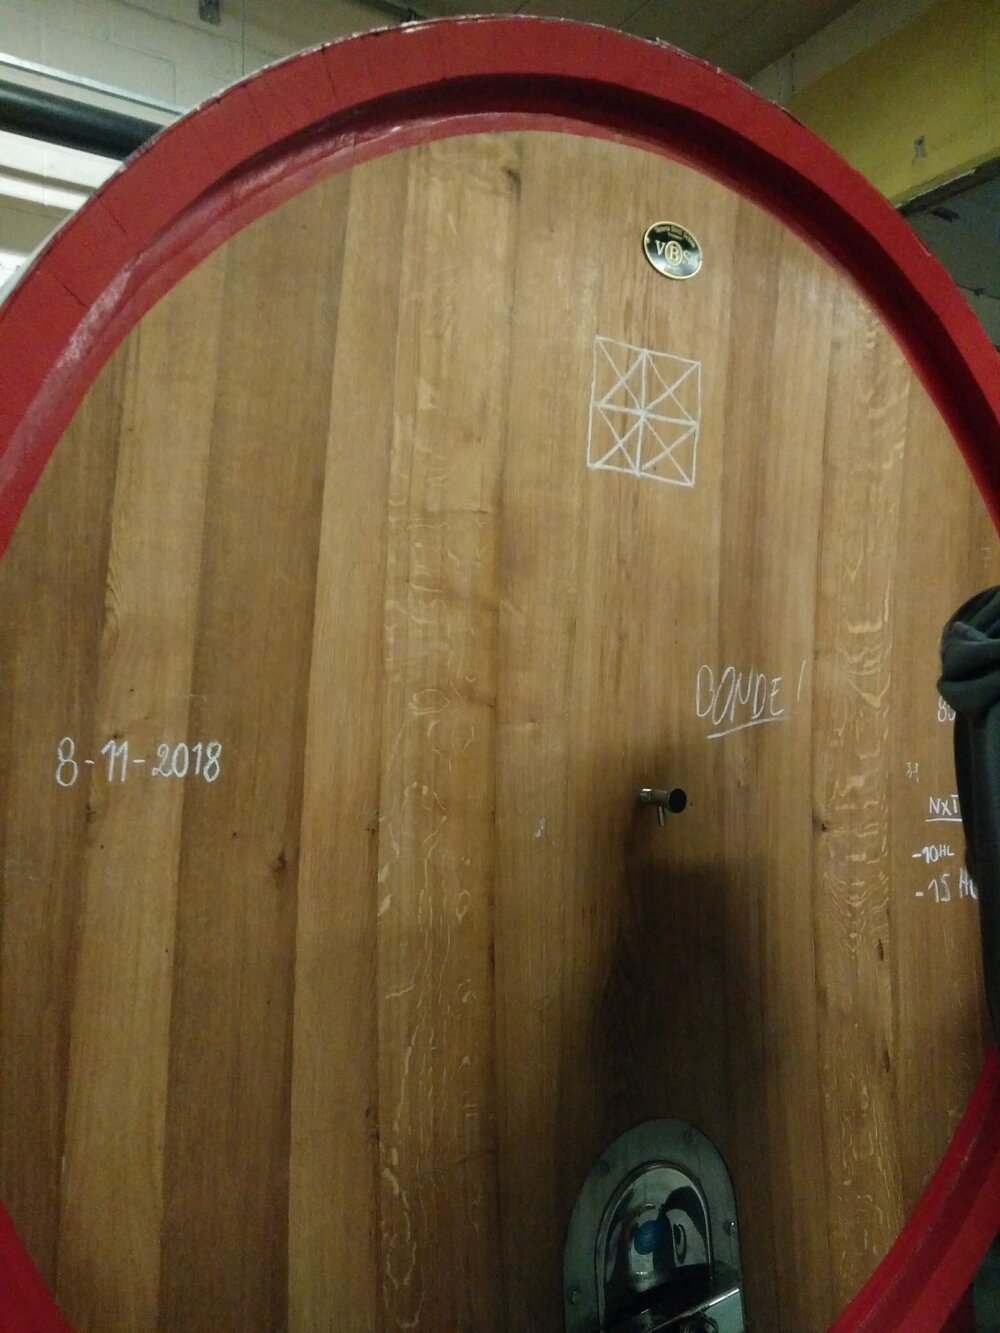  A barrel with Lindemann’s beer 